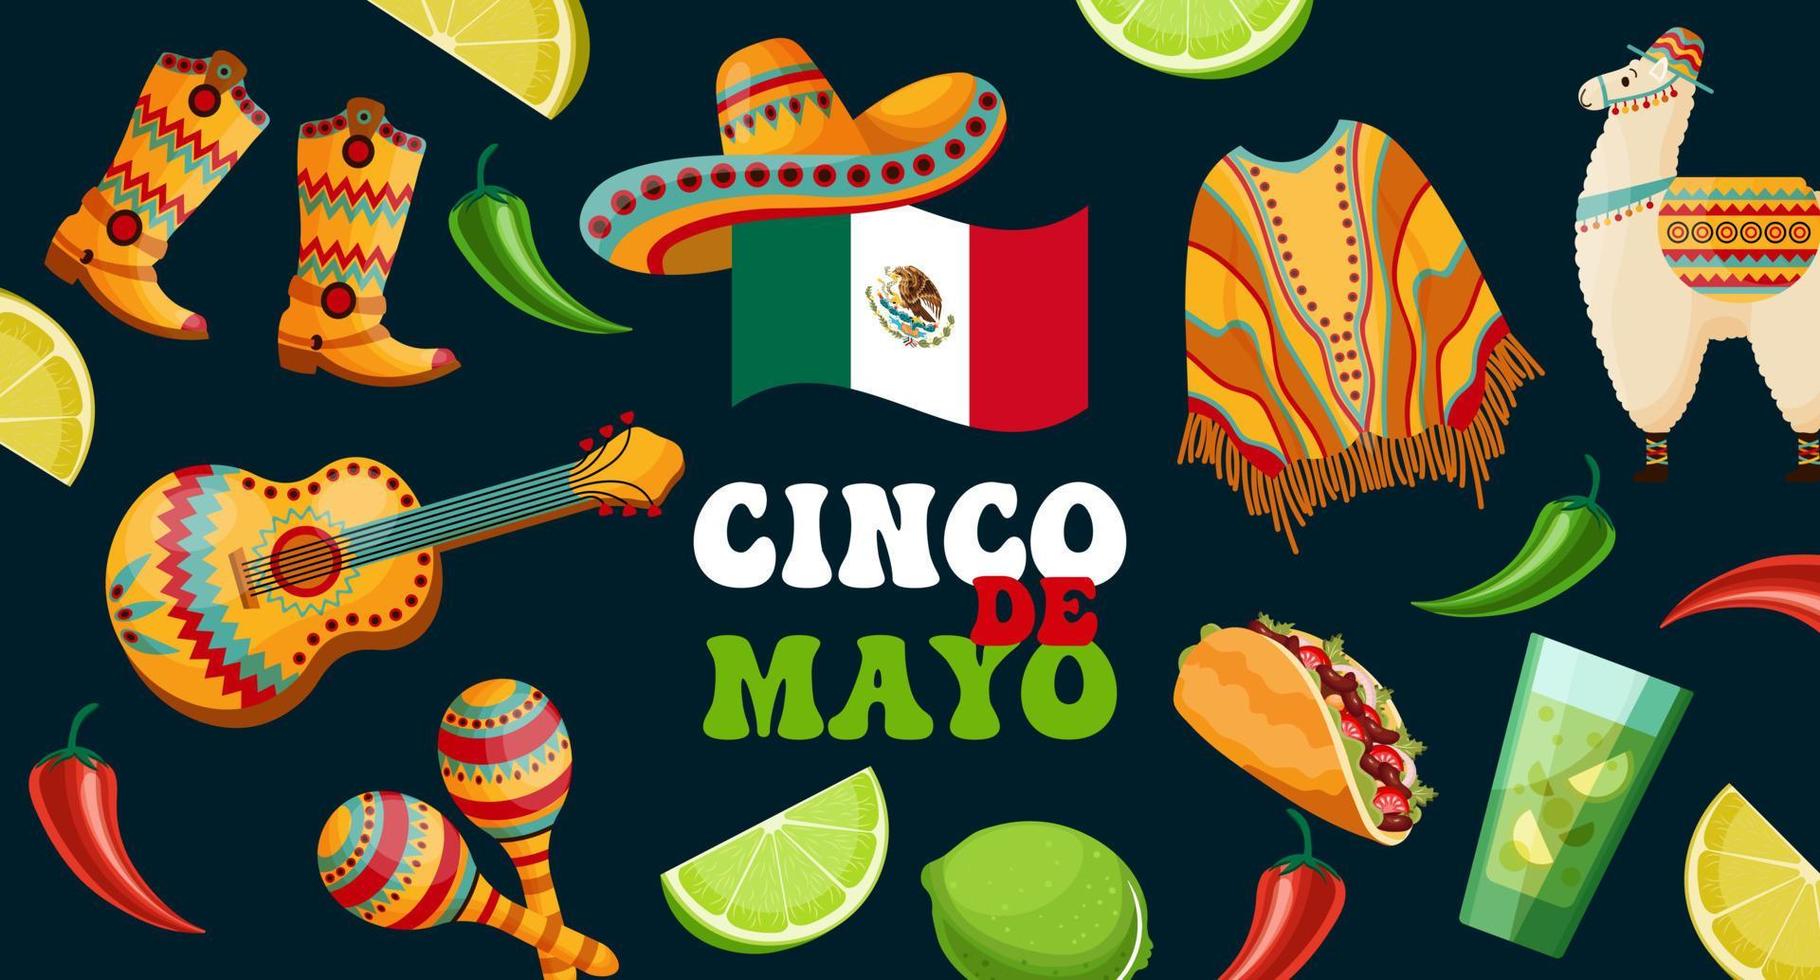 Cinco de mayo banner with symbols of Mexico, Mexico flag, maracas, sambrero, chili, poncho, lemon, llama, cowboy boots and guitar on dark background. Poster, holiday background, vector